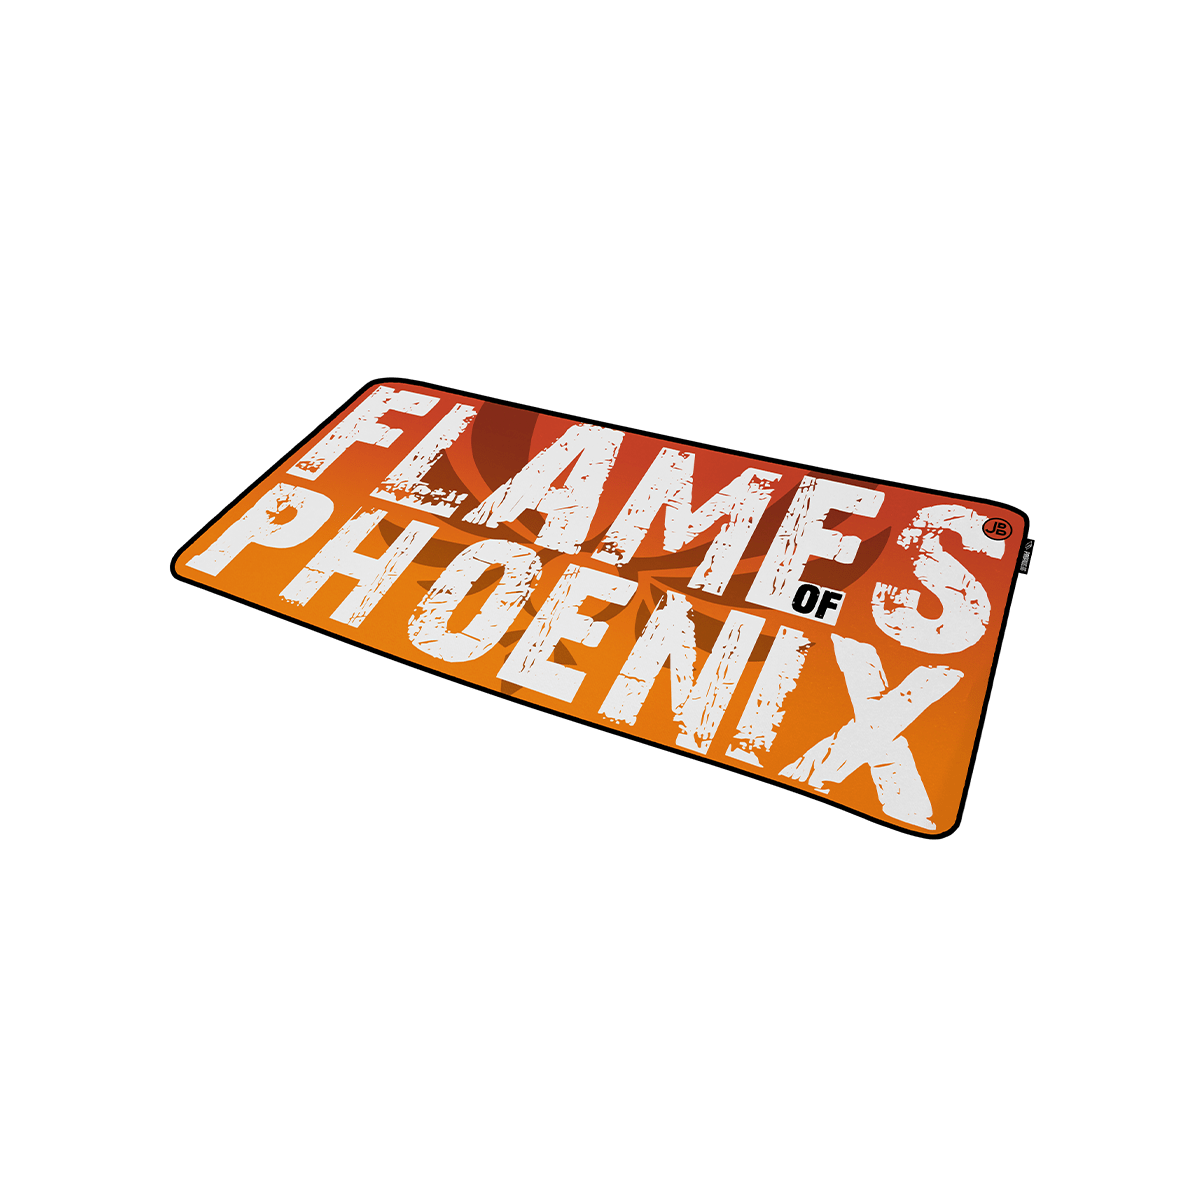 FLAMES OF PHOENIX - Mousepad - XXL